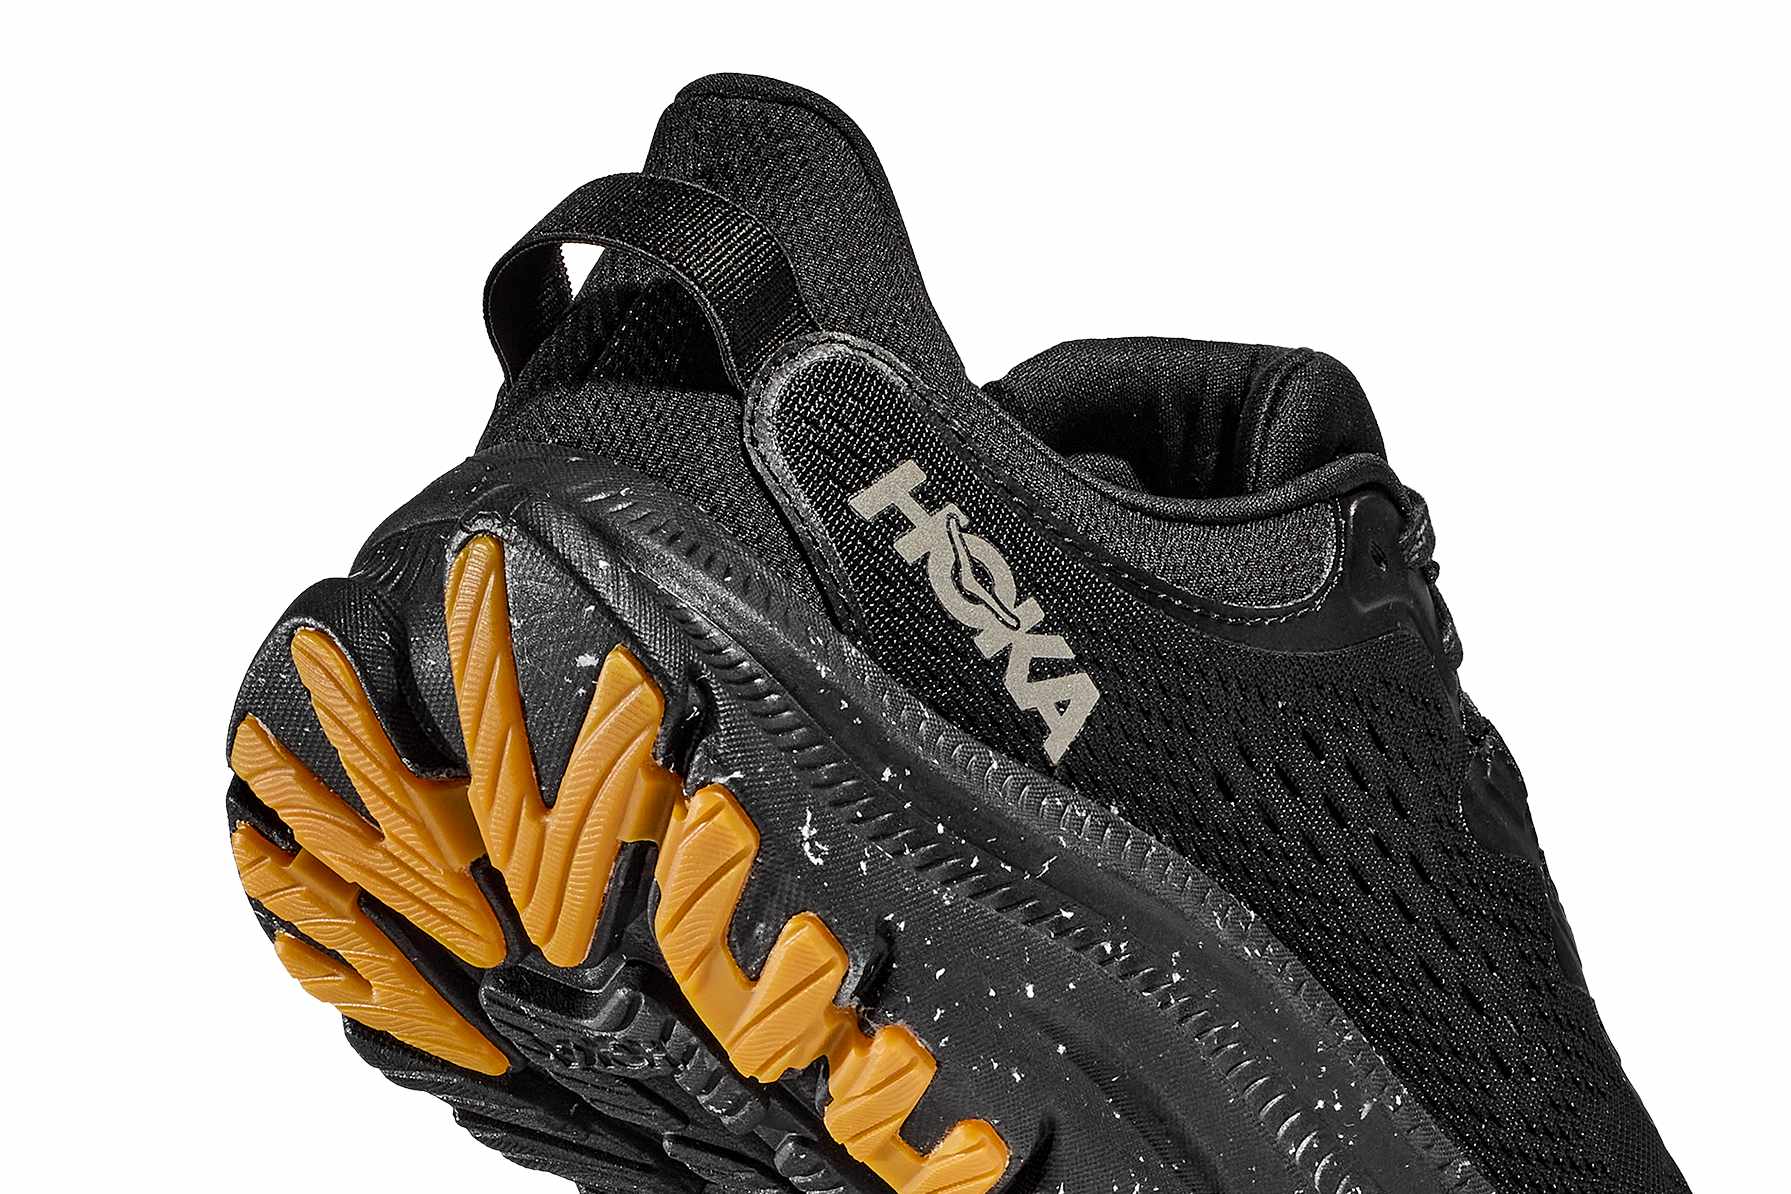 HOKA's Kawana 2 sneaker in release colorways